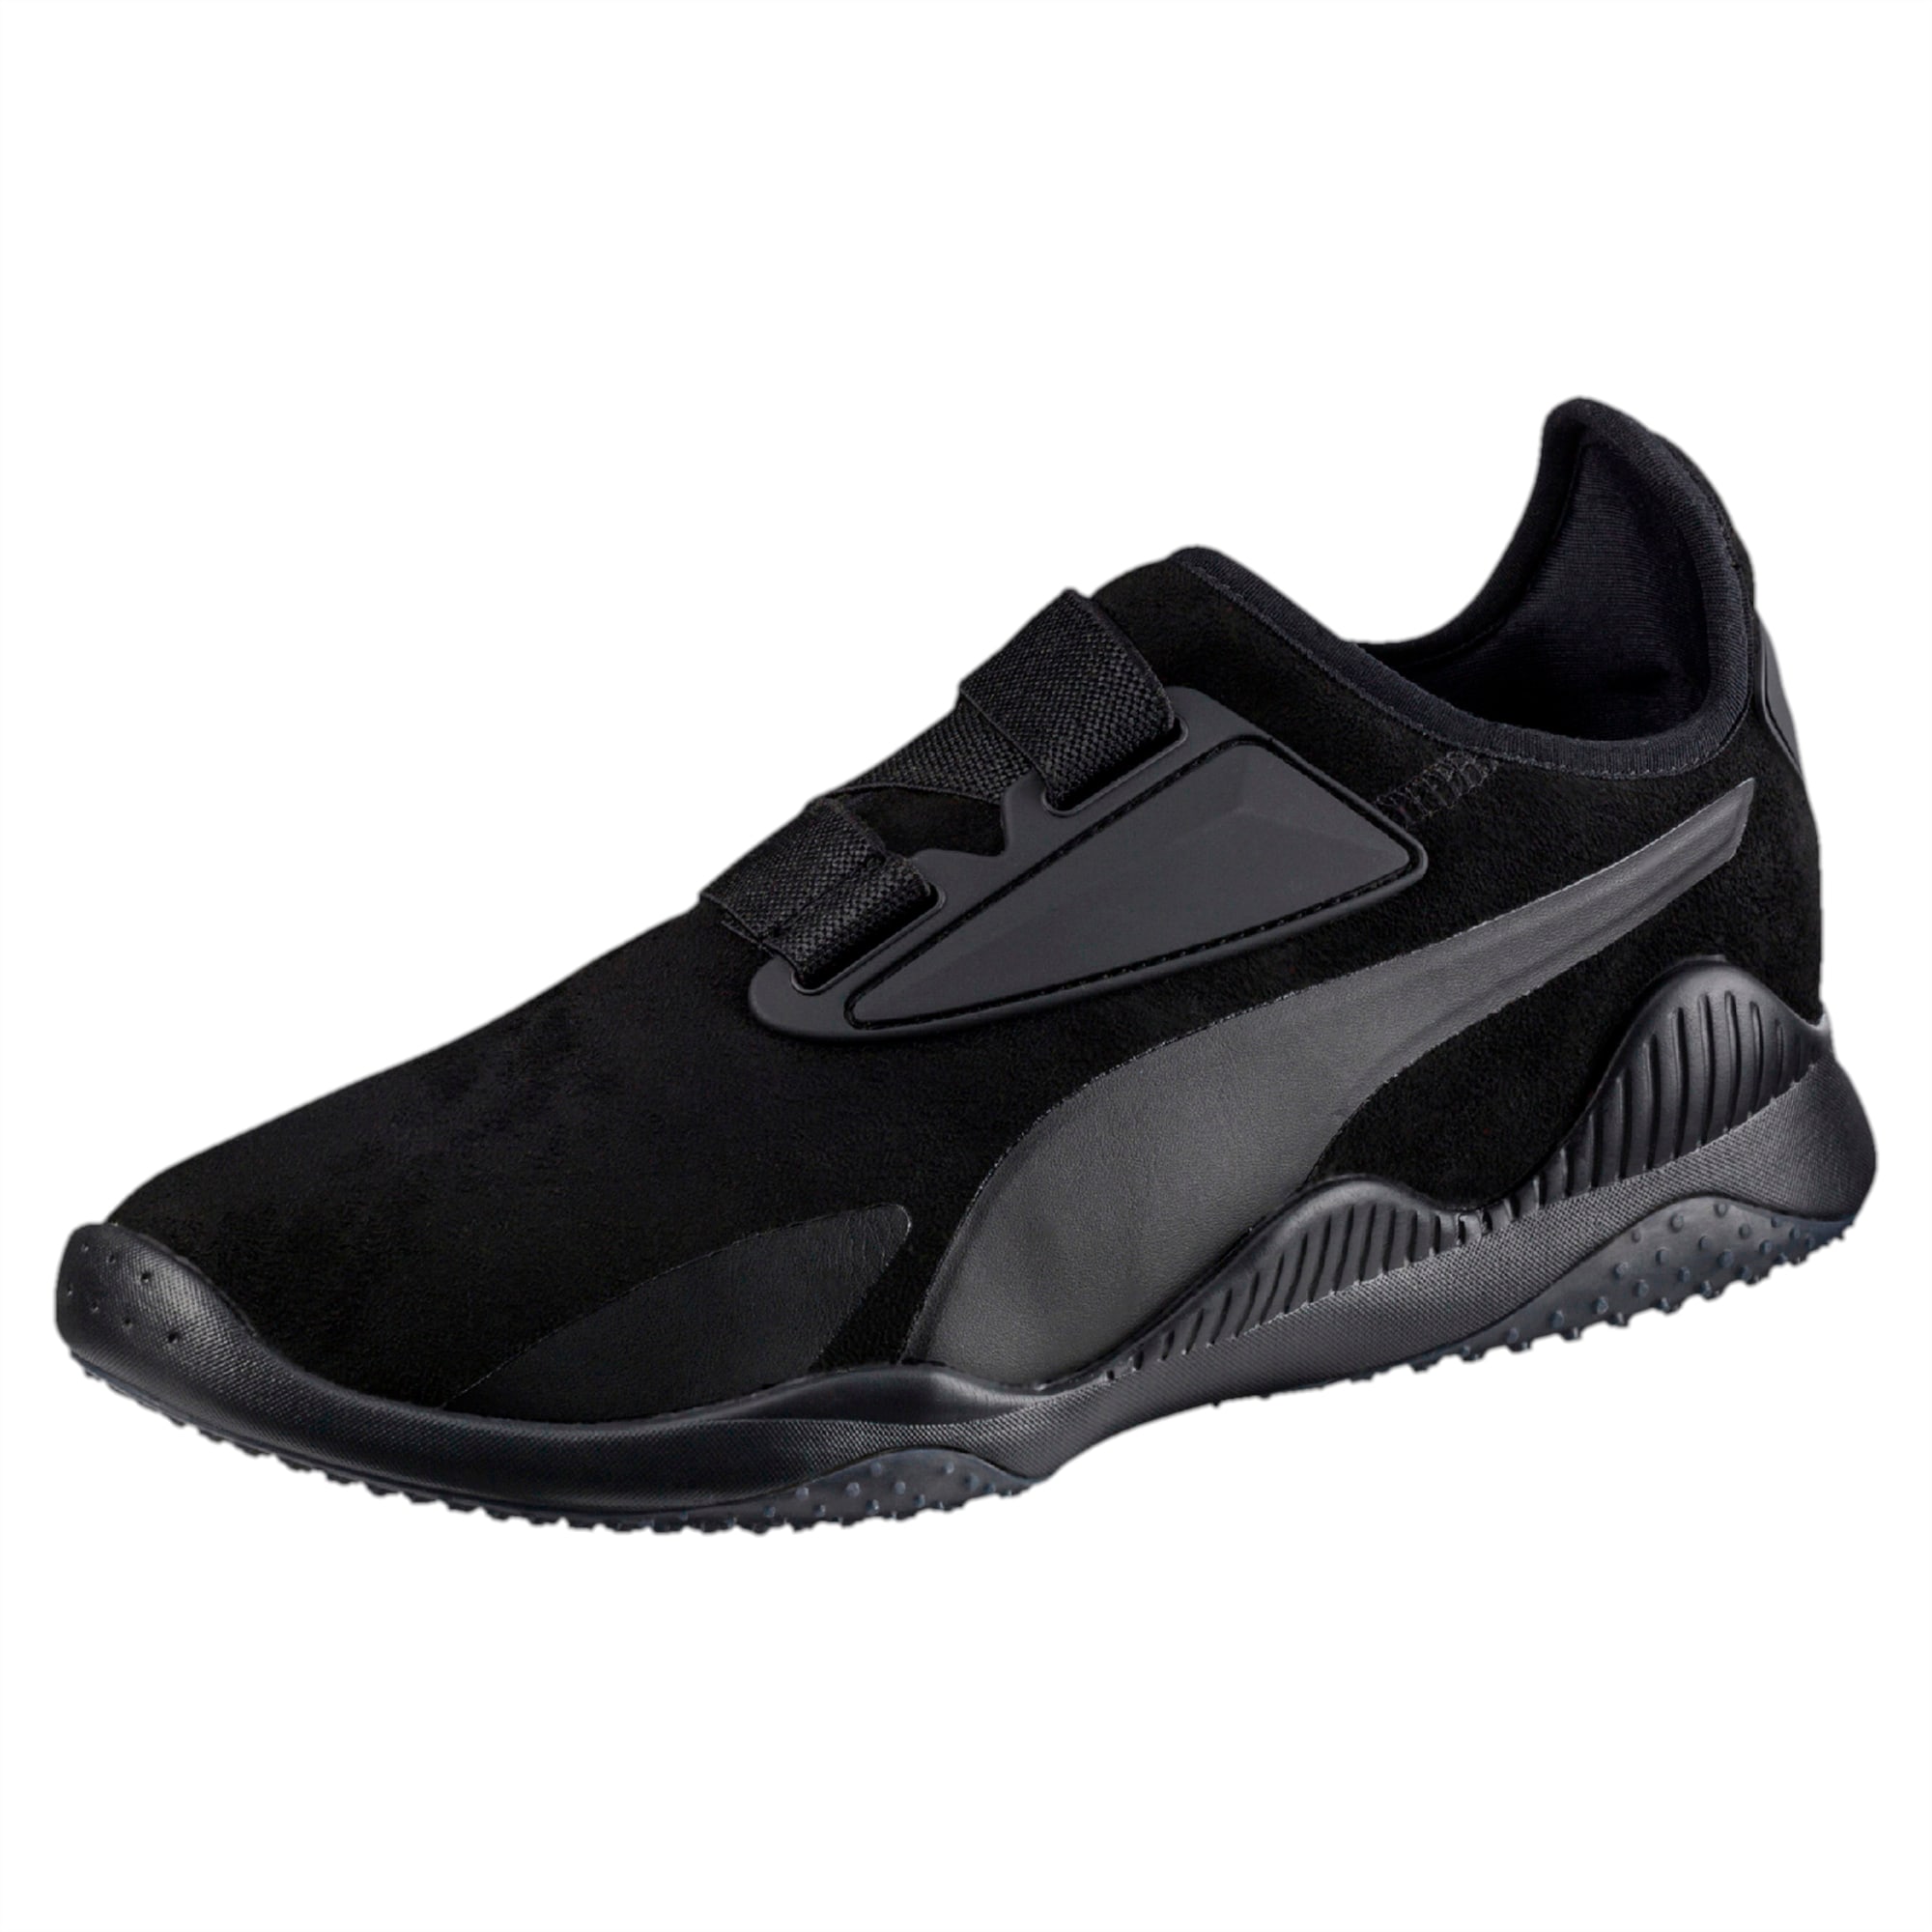 Mostro Hypernature Shoes | Puma Black-Puma Black | PUMA Super Sale | PUMA